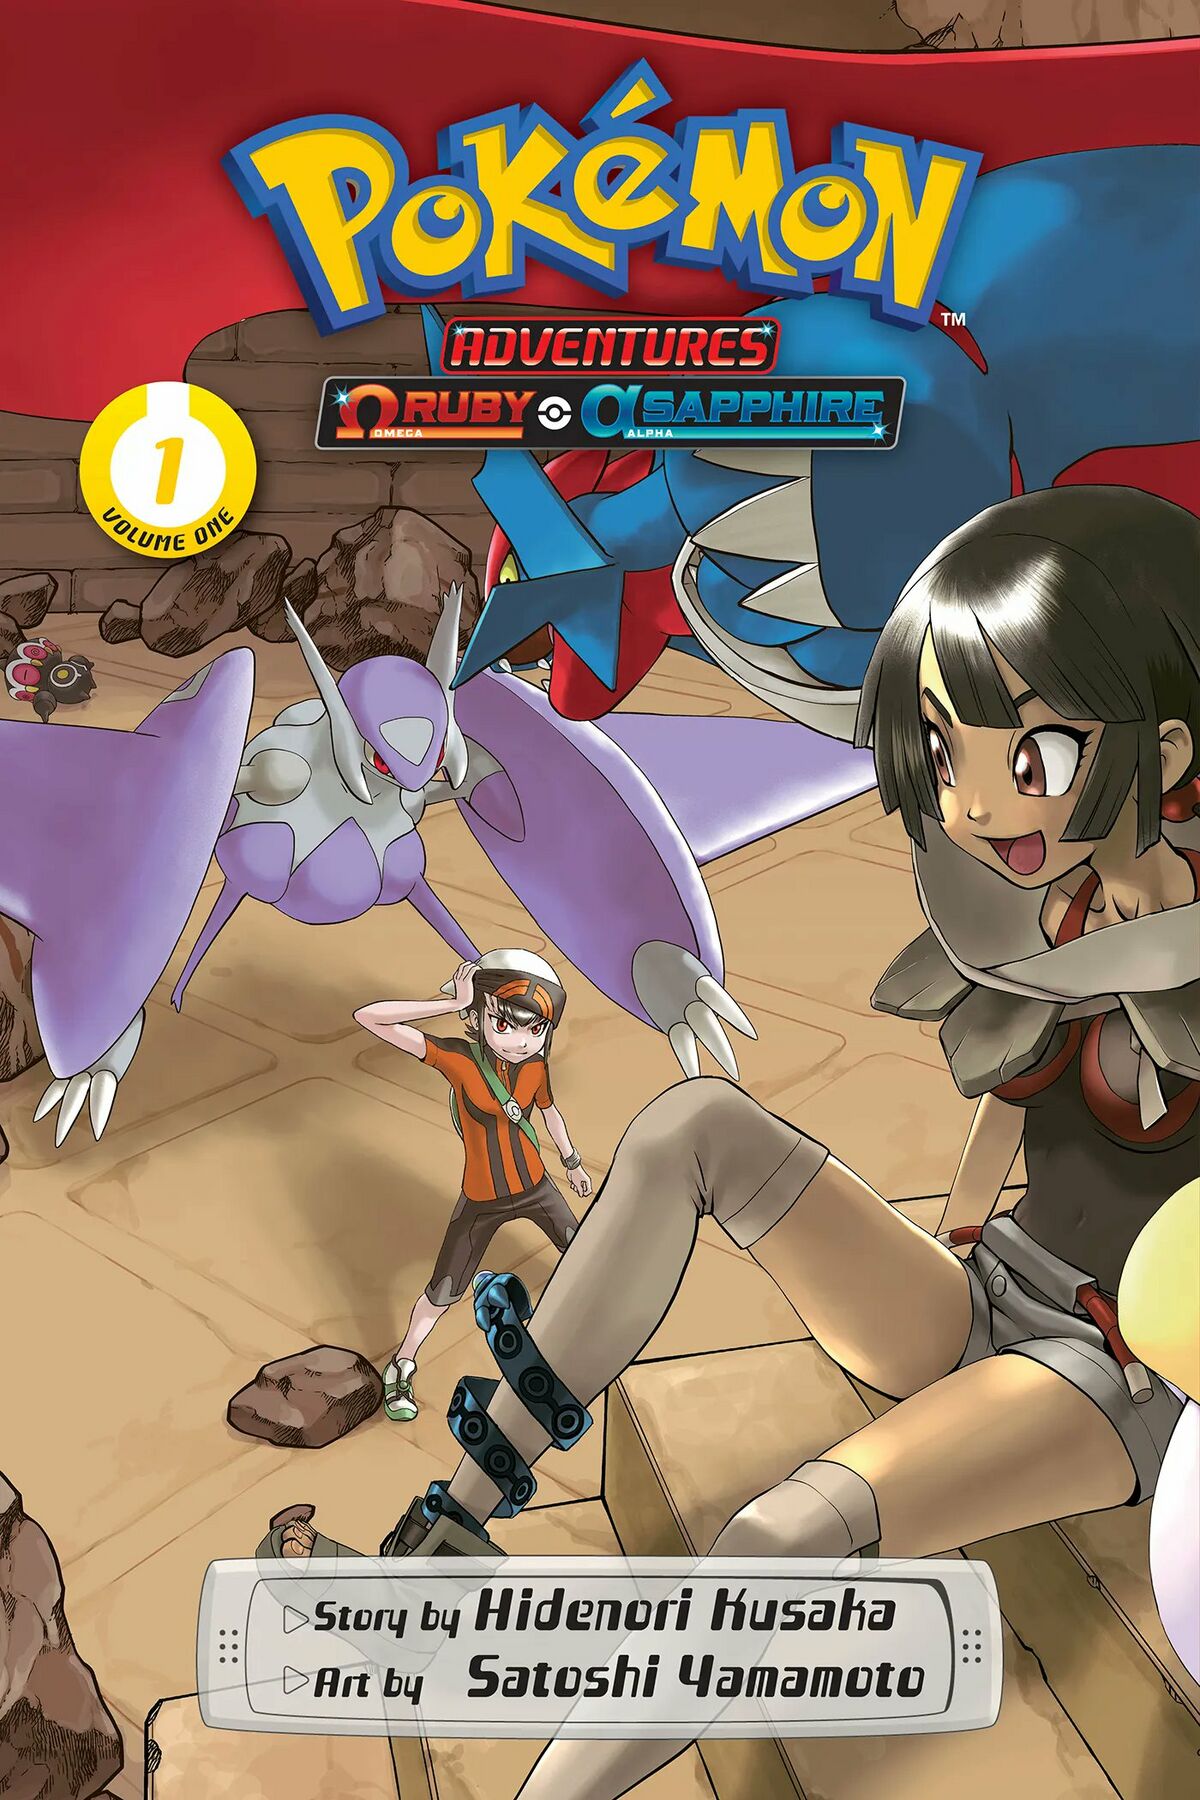 Arceus (Adventures) - Bulbapedia, the community-driven Pokémon encyclopedia